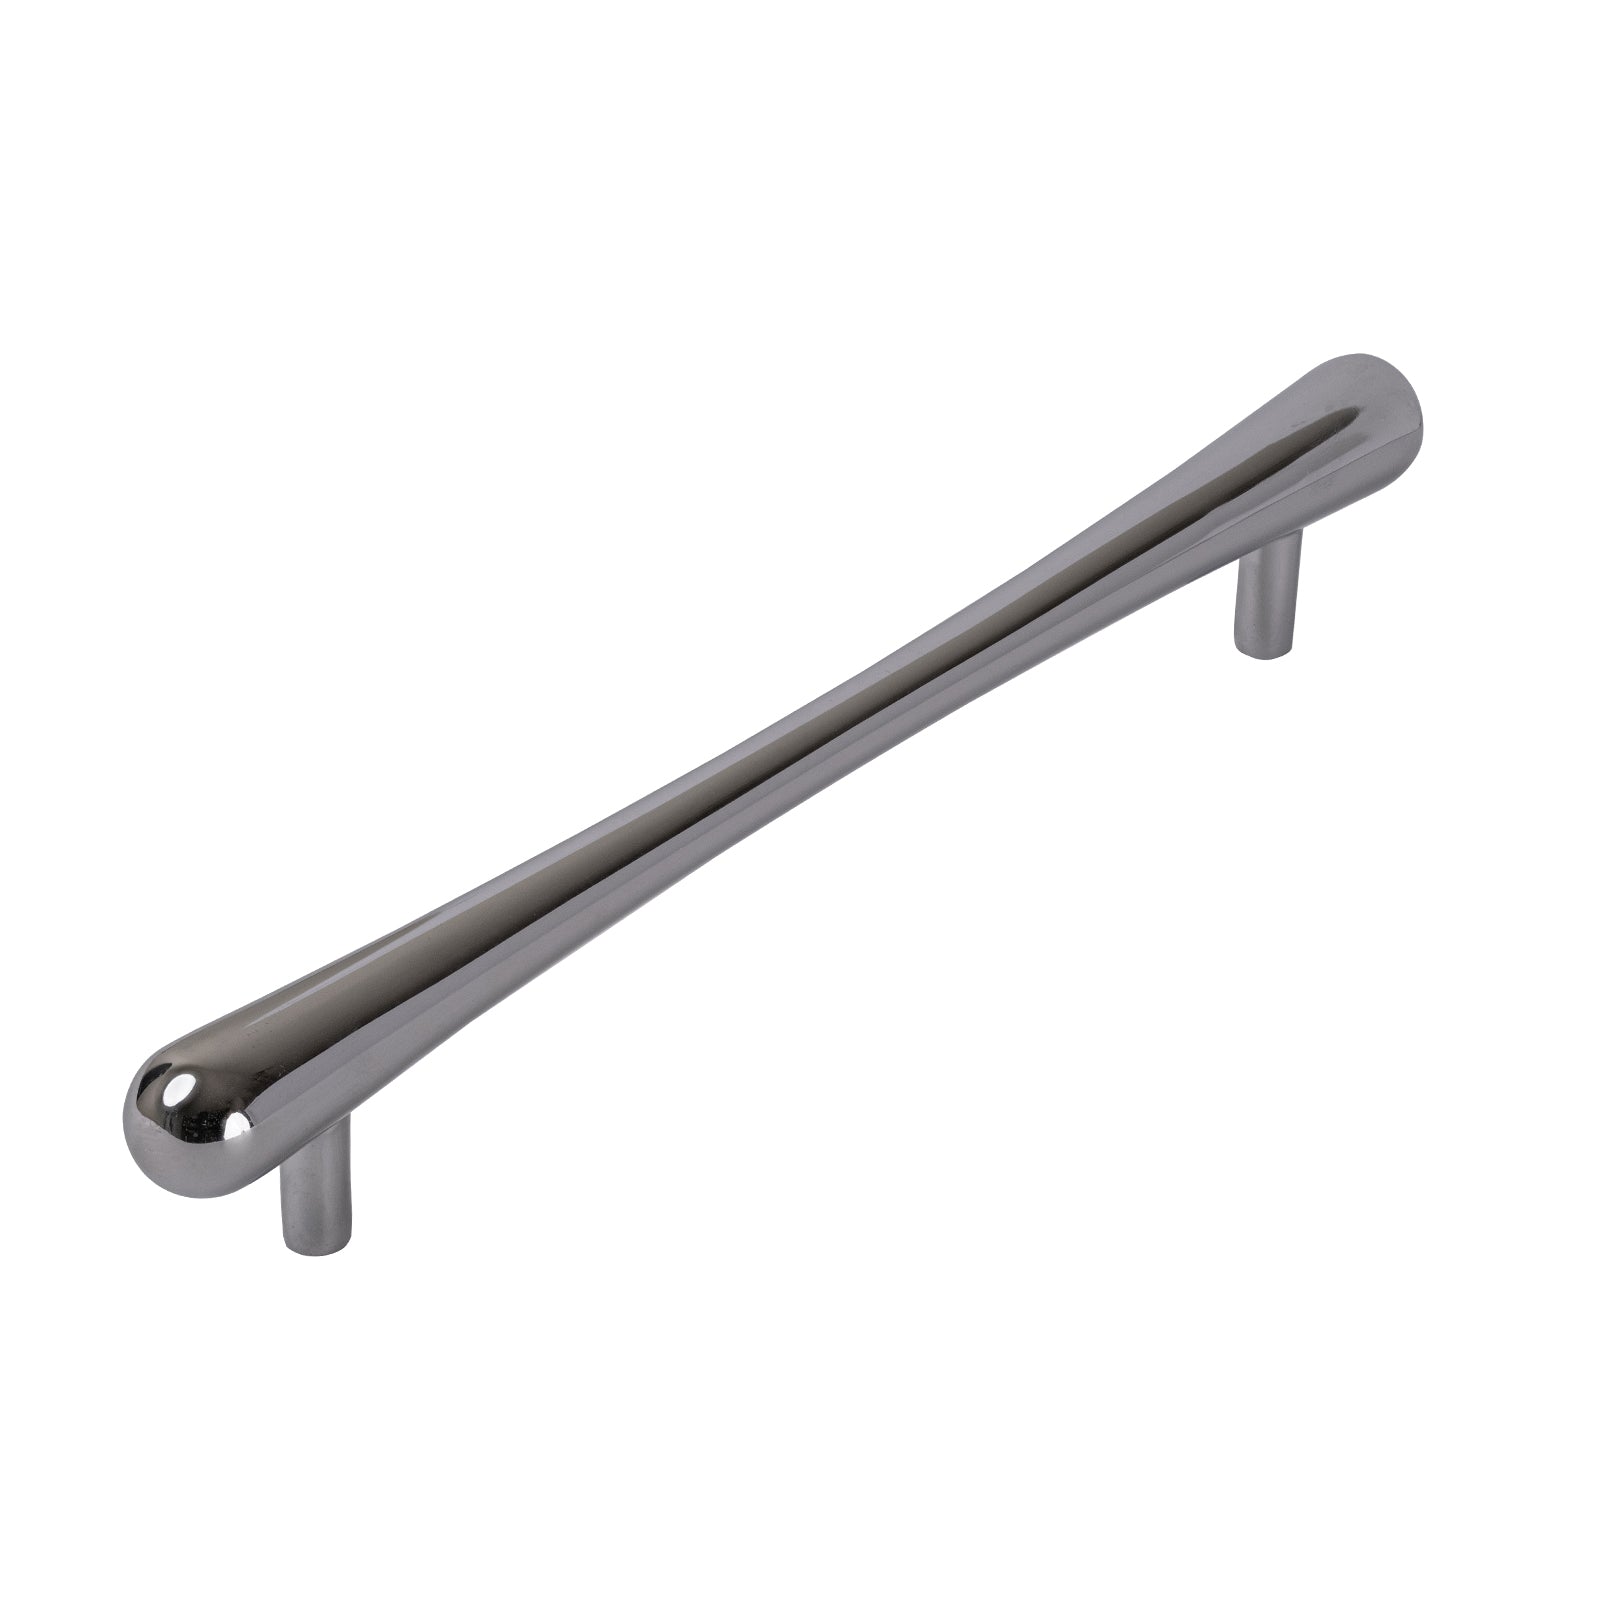 Chrome bar pull handles, kitchen cabinet handles